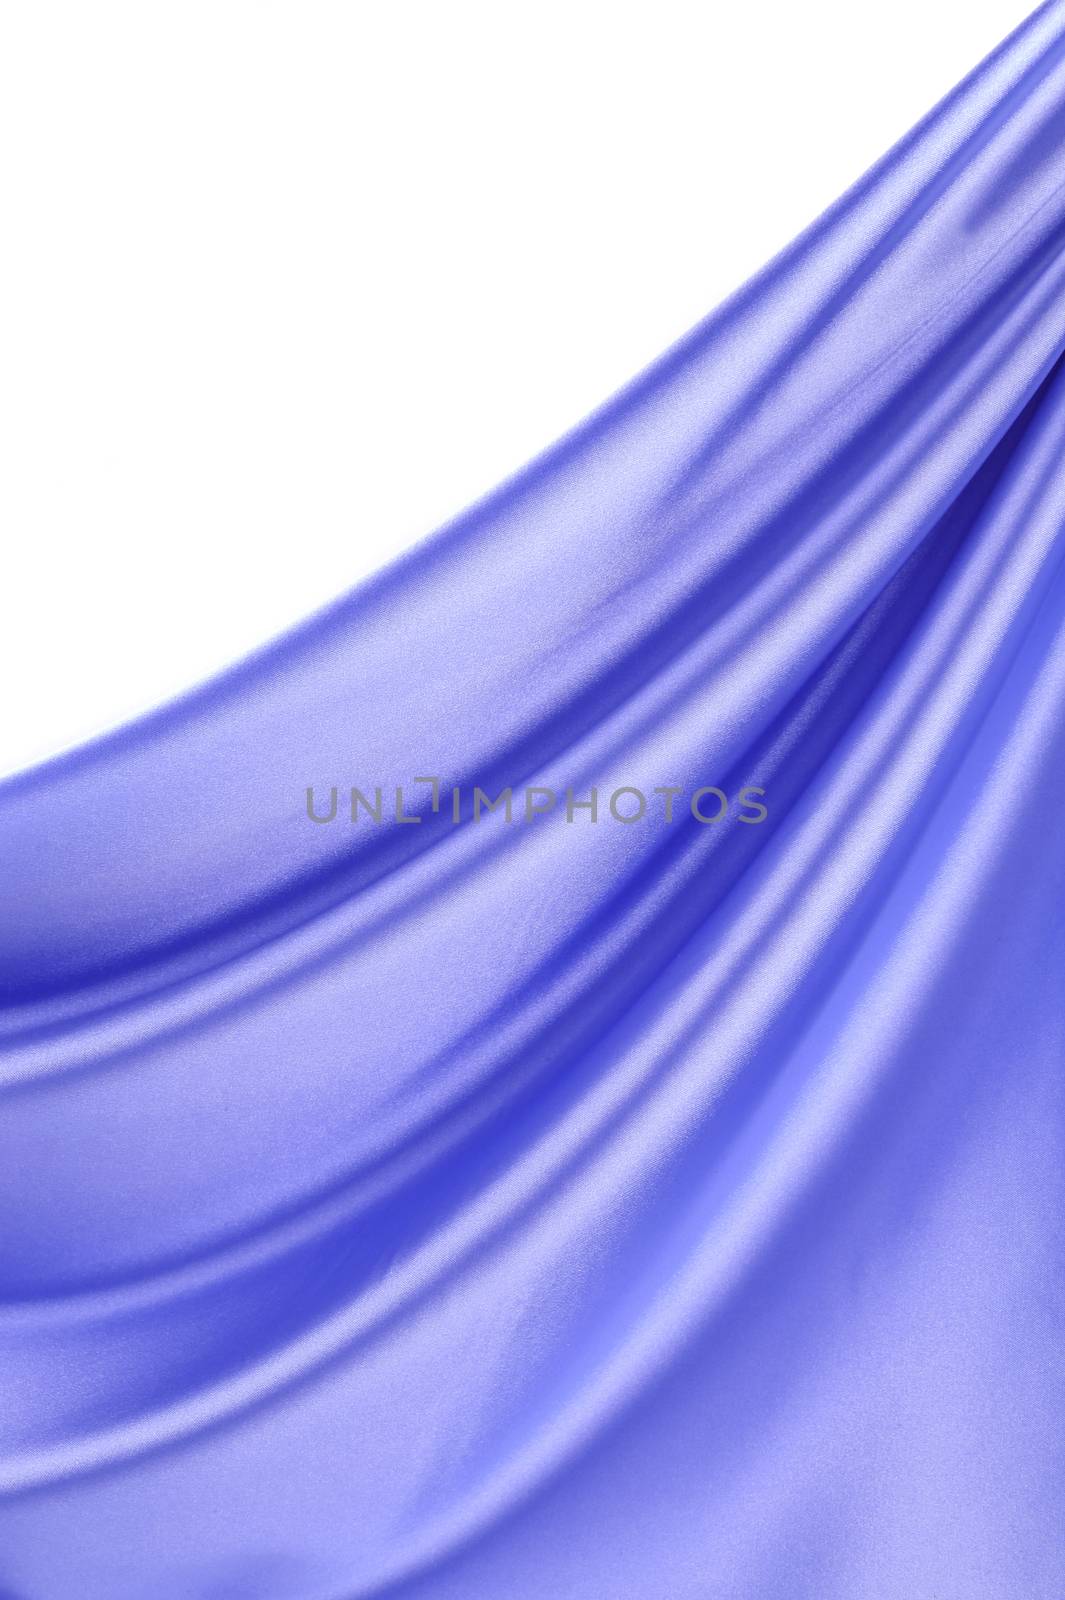 Blue silk drape. by indigolotos